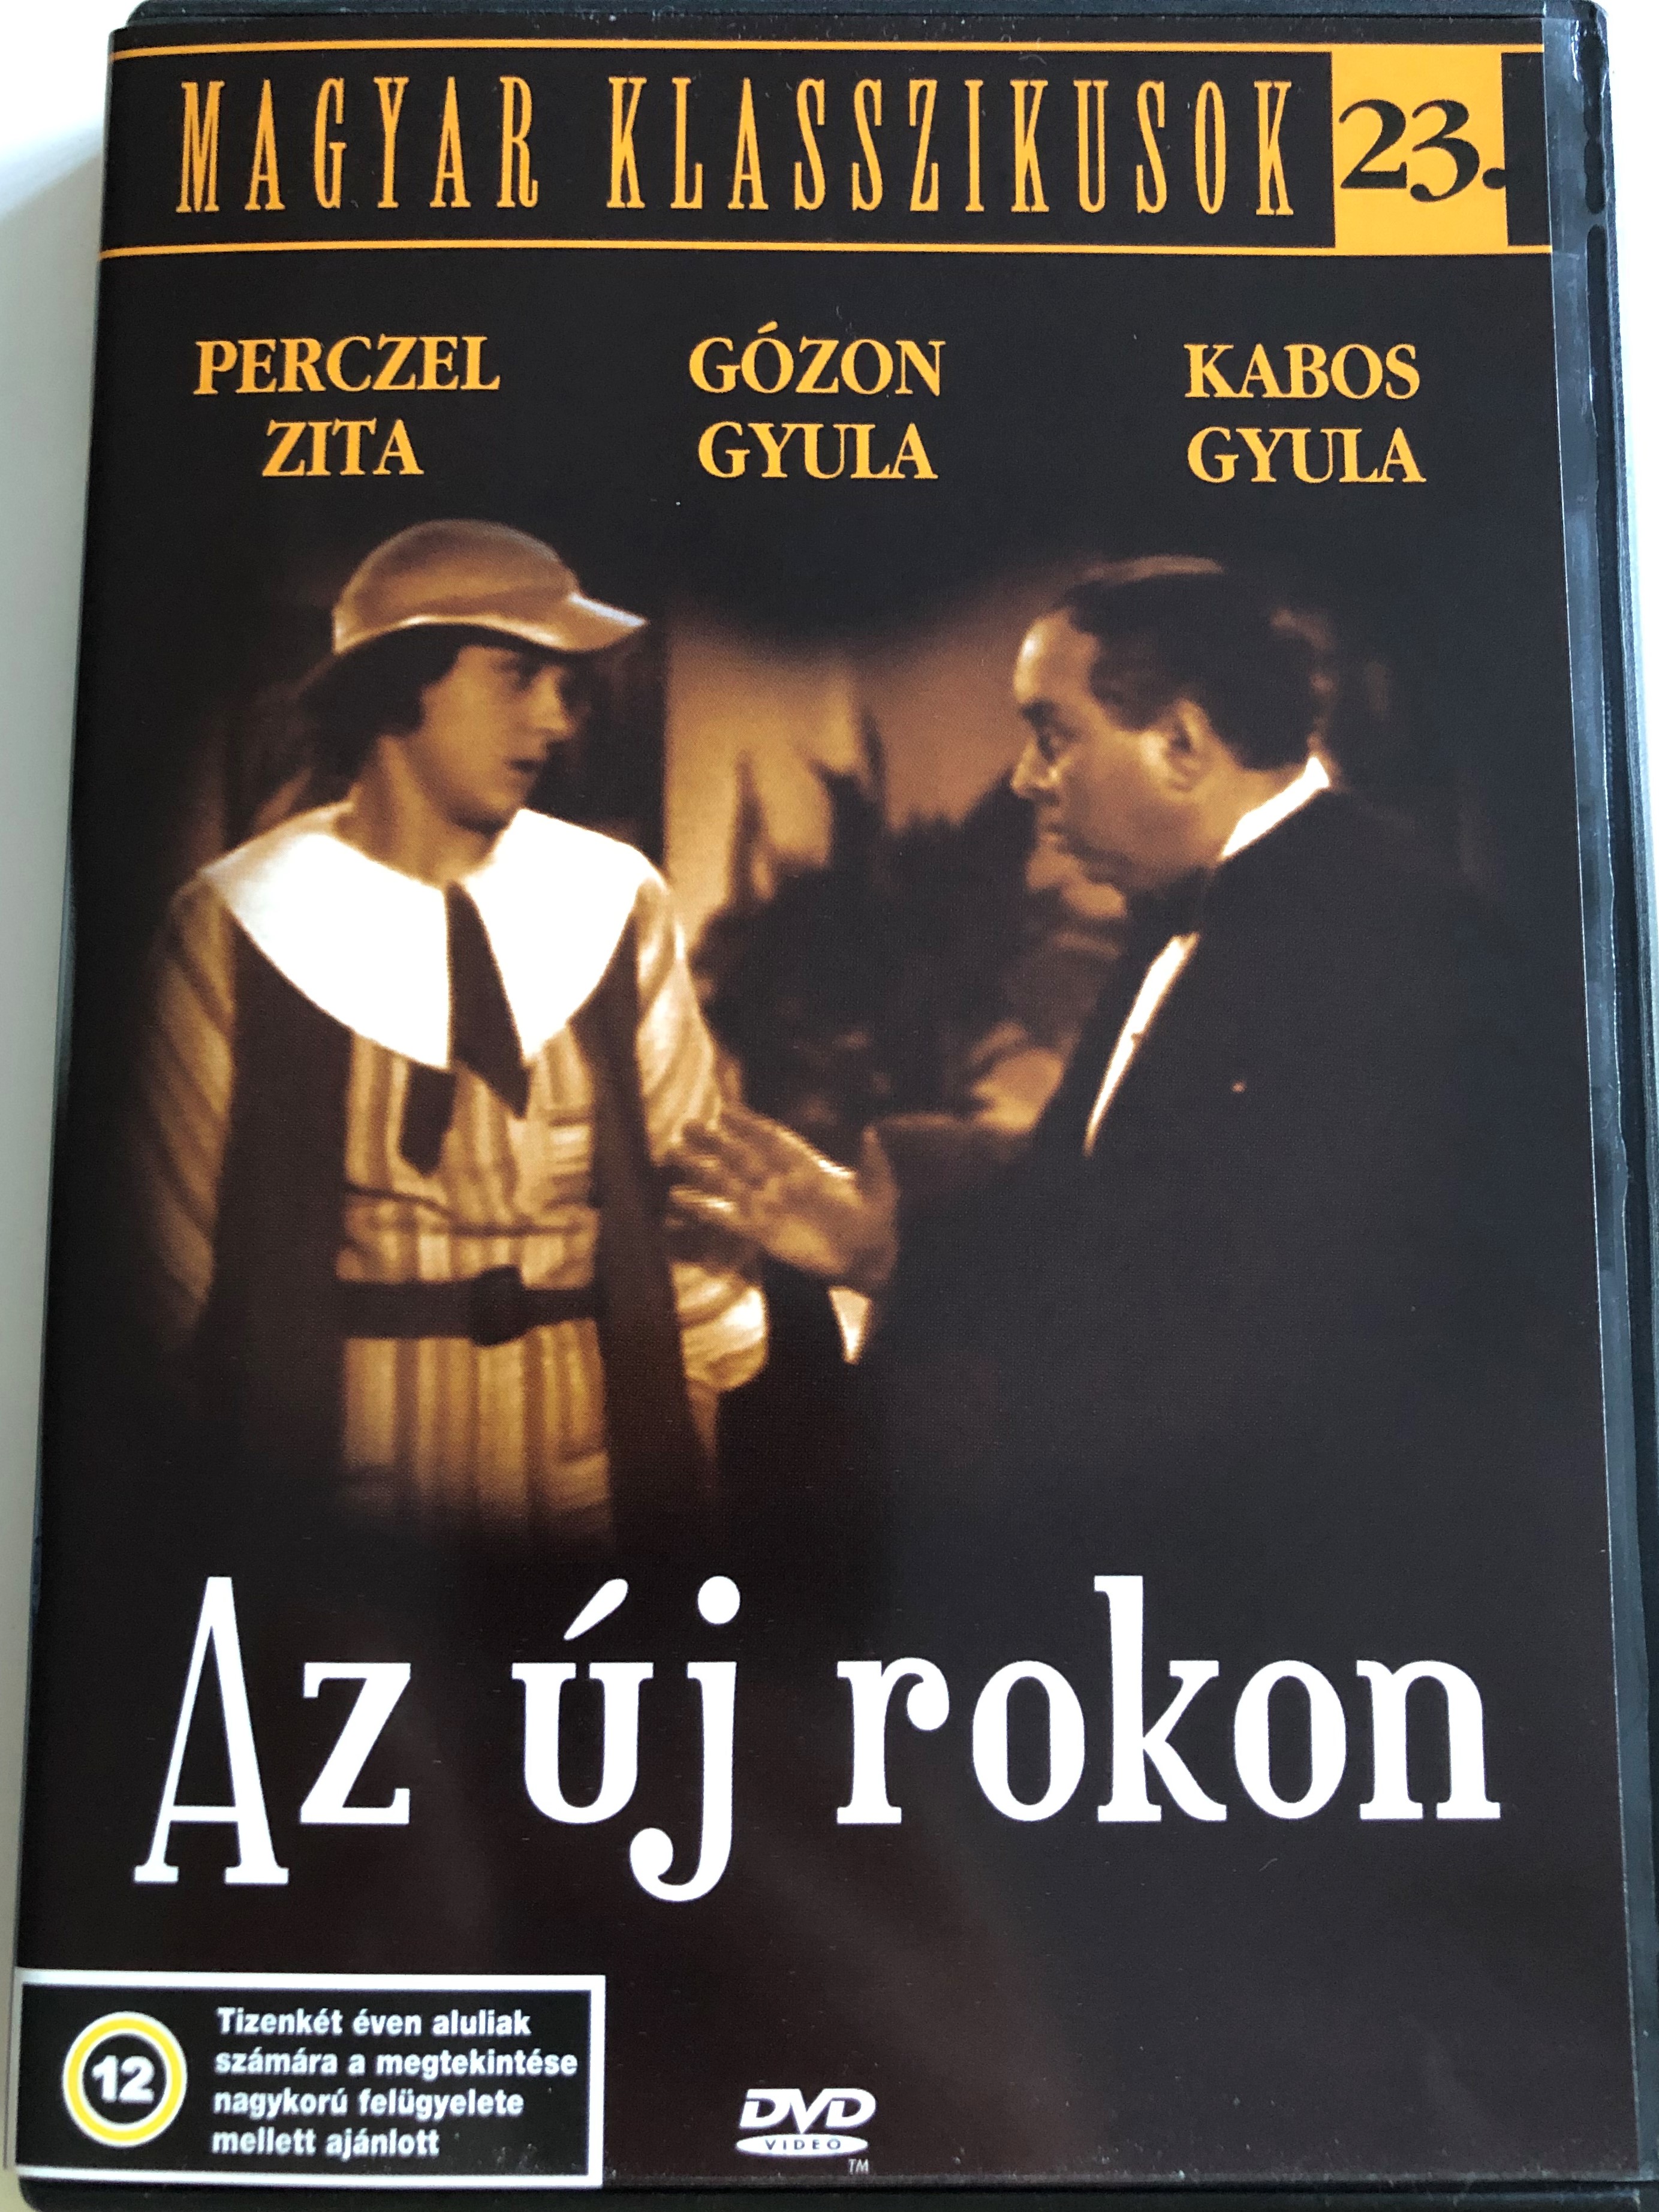 az-j-rokon-dvd-1934-the-new-relative-directed-by-ga-l-b-la-starring-perczel-zita-g-zon-gyula-kabos-gyula-berky-lili-hungarian-b-w-classic-magyar-klasszikusok-23.-1-.jpg